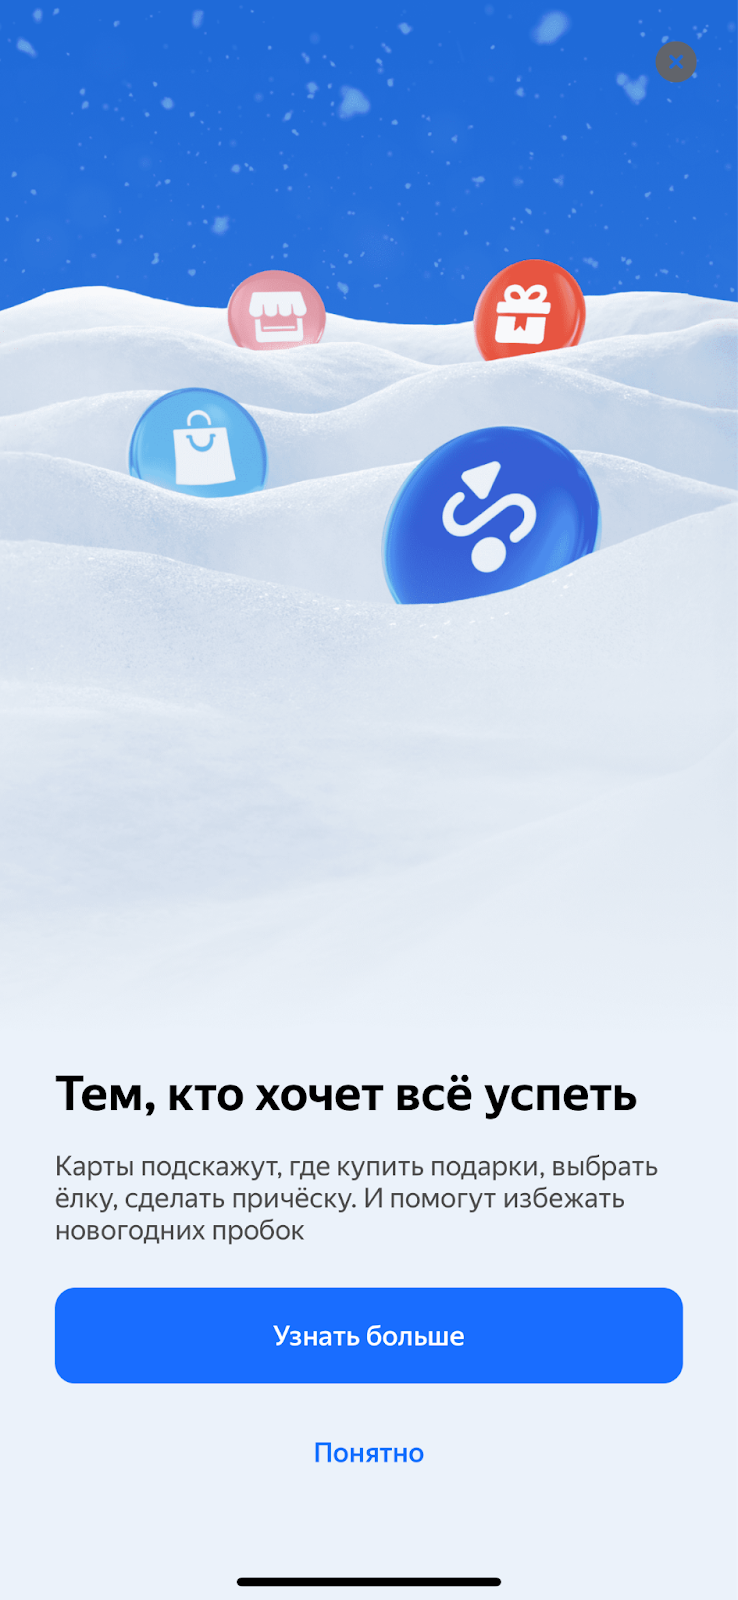 НГ-дизайн в Яндекс Картах